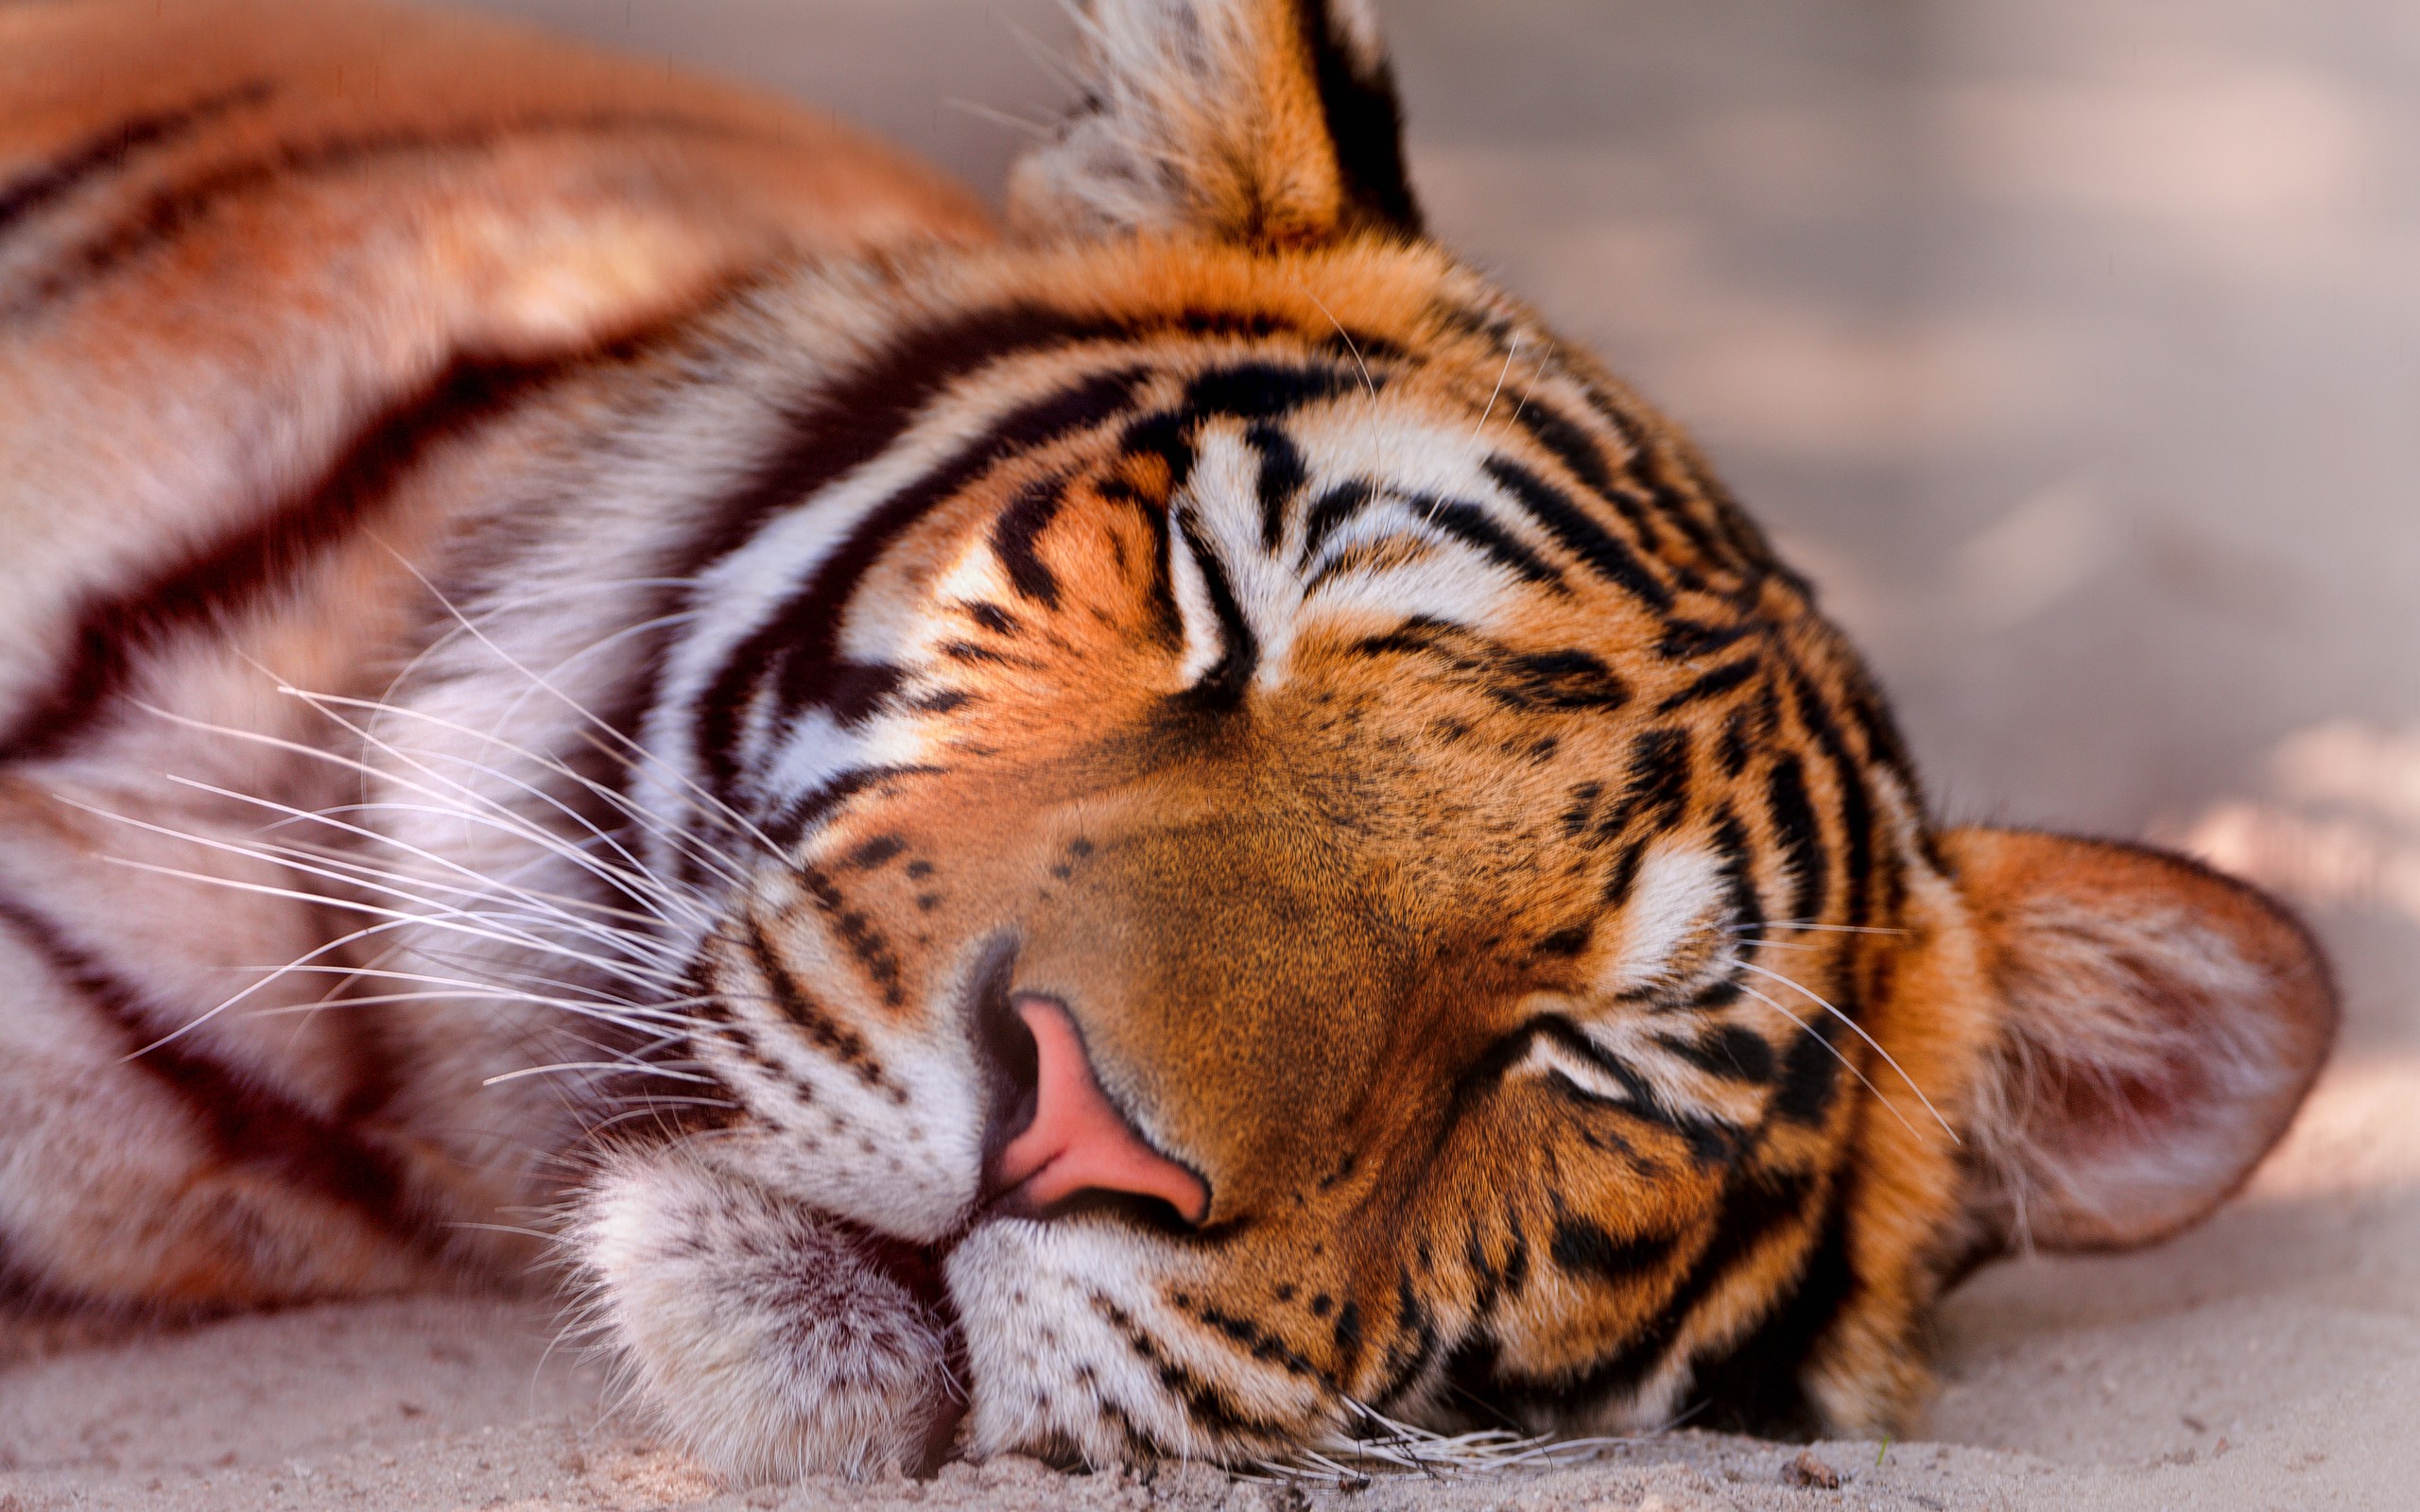 Sleeping Tiger | Cool Wallpapers